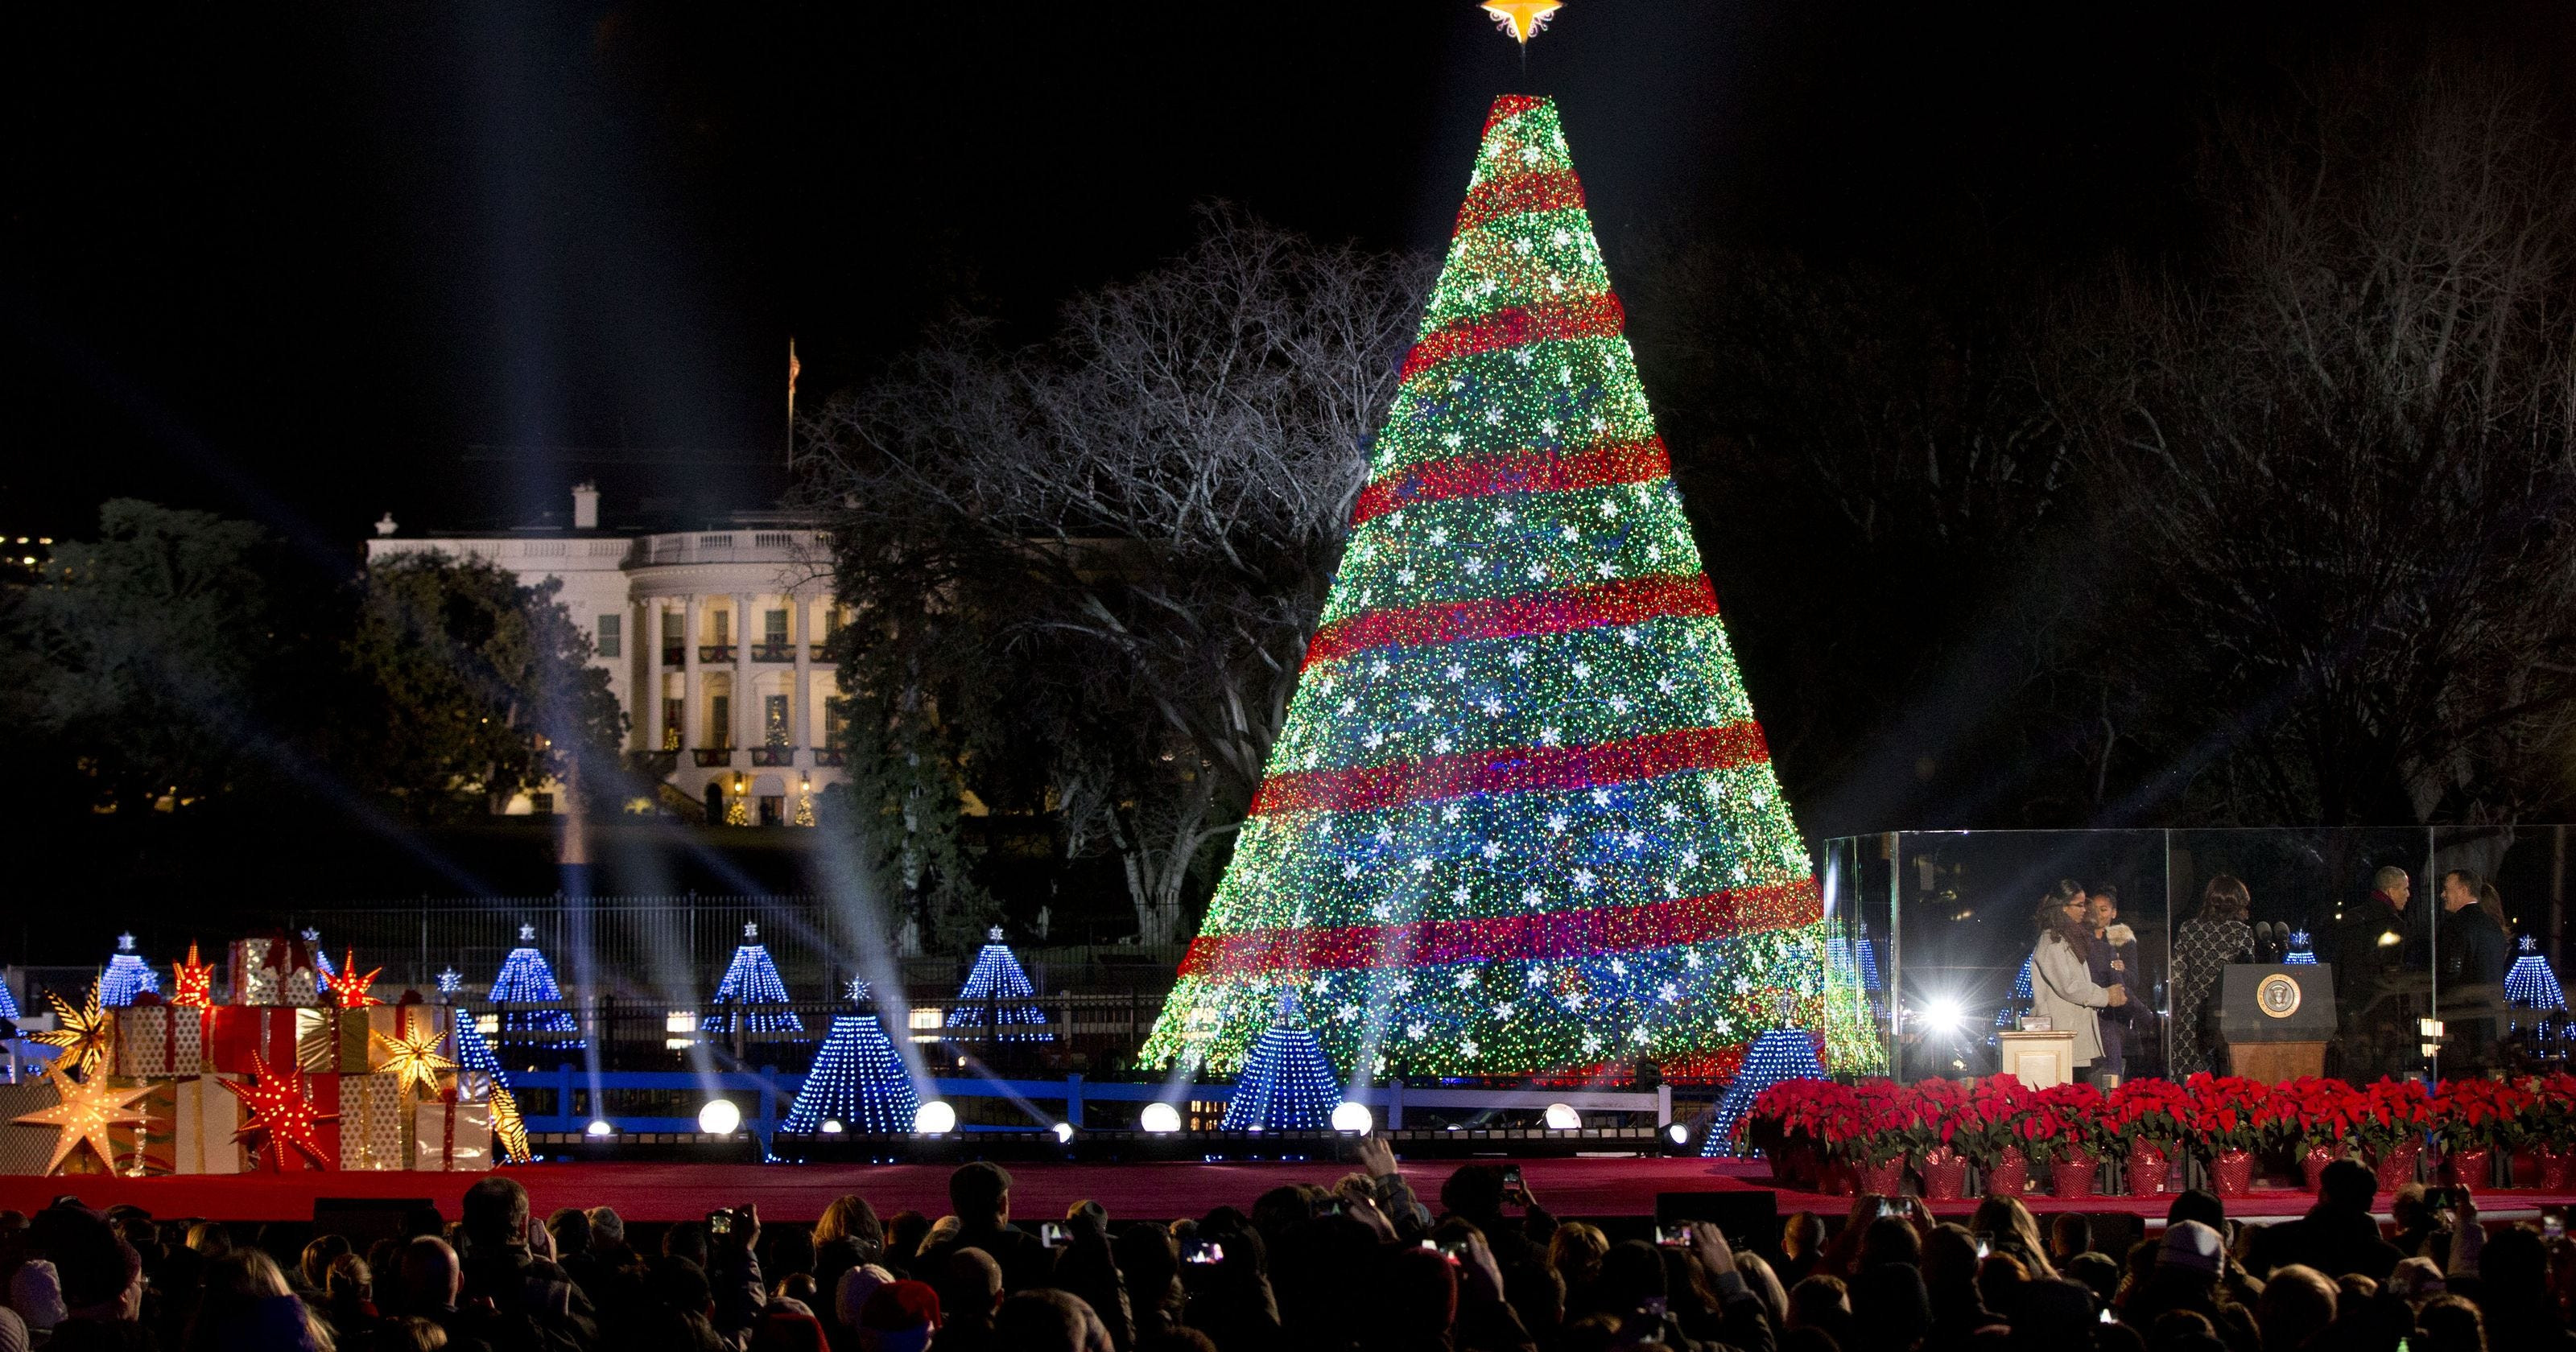 White House Christmas Tree Lighting
 Obama and family light National Christmas Tree